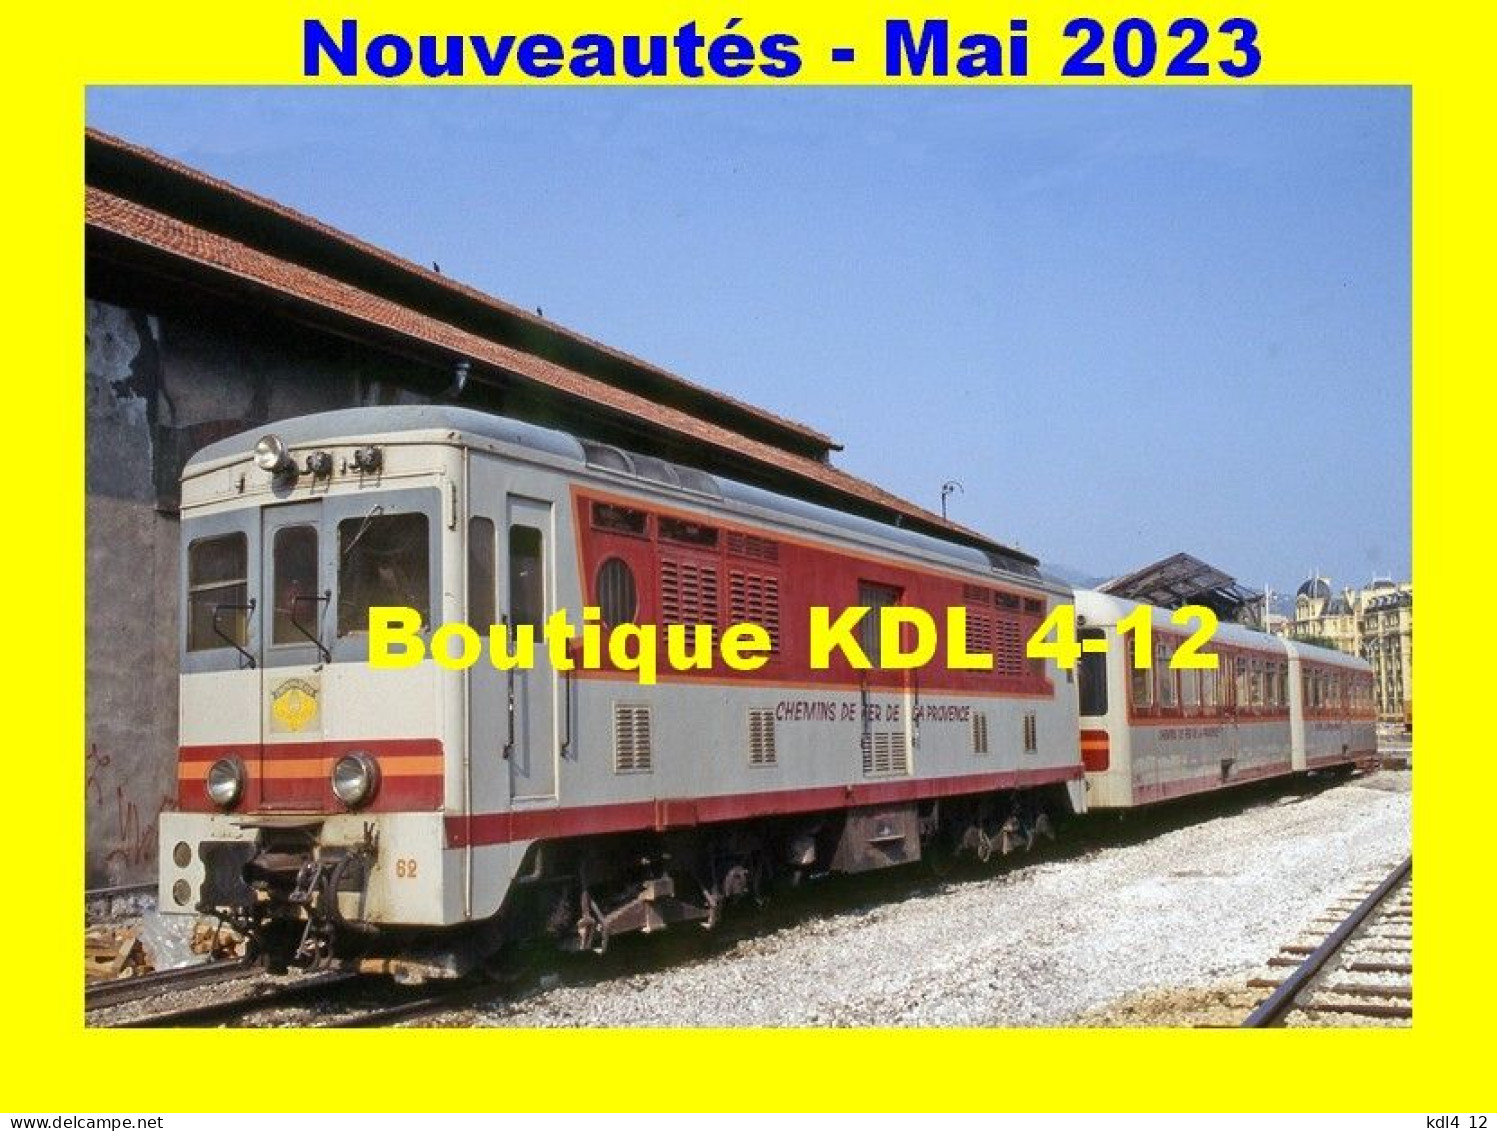 AL 879 - Train, Loco Brissonneau Et Lotz N° 62 - NICE - Alpes Maritimes - CP - Schienenverkehr - Bahnhof